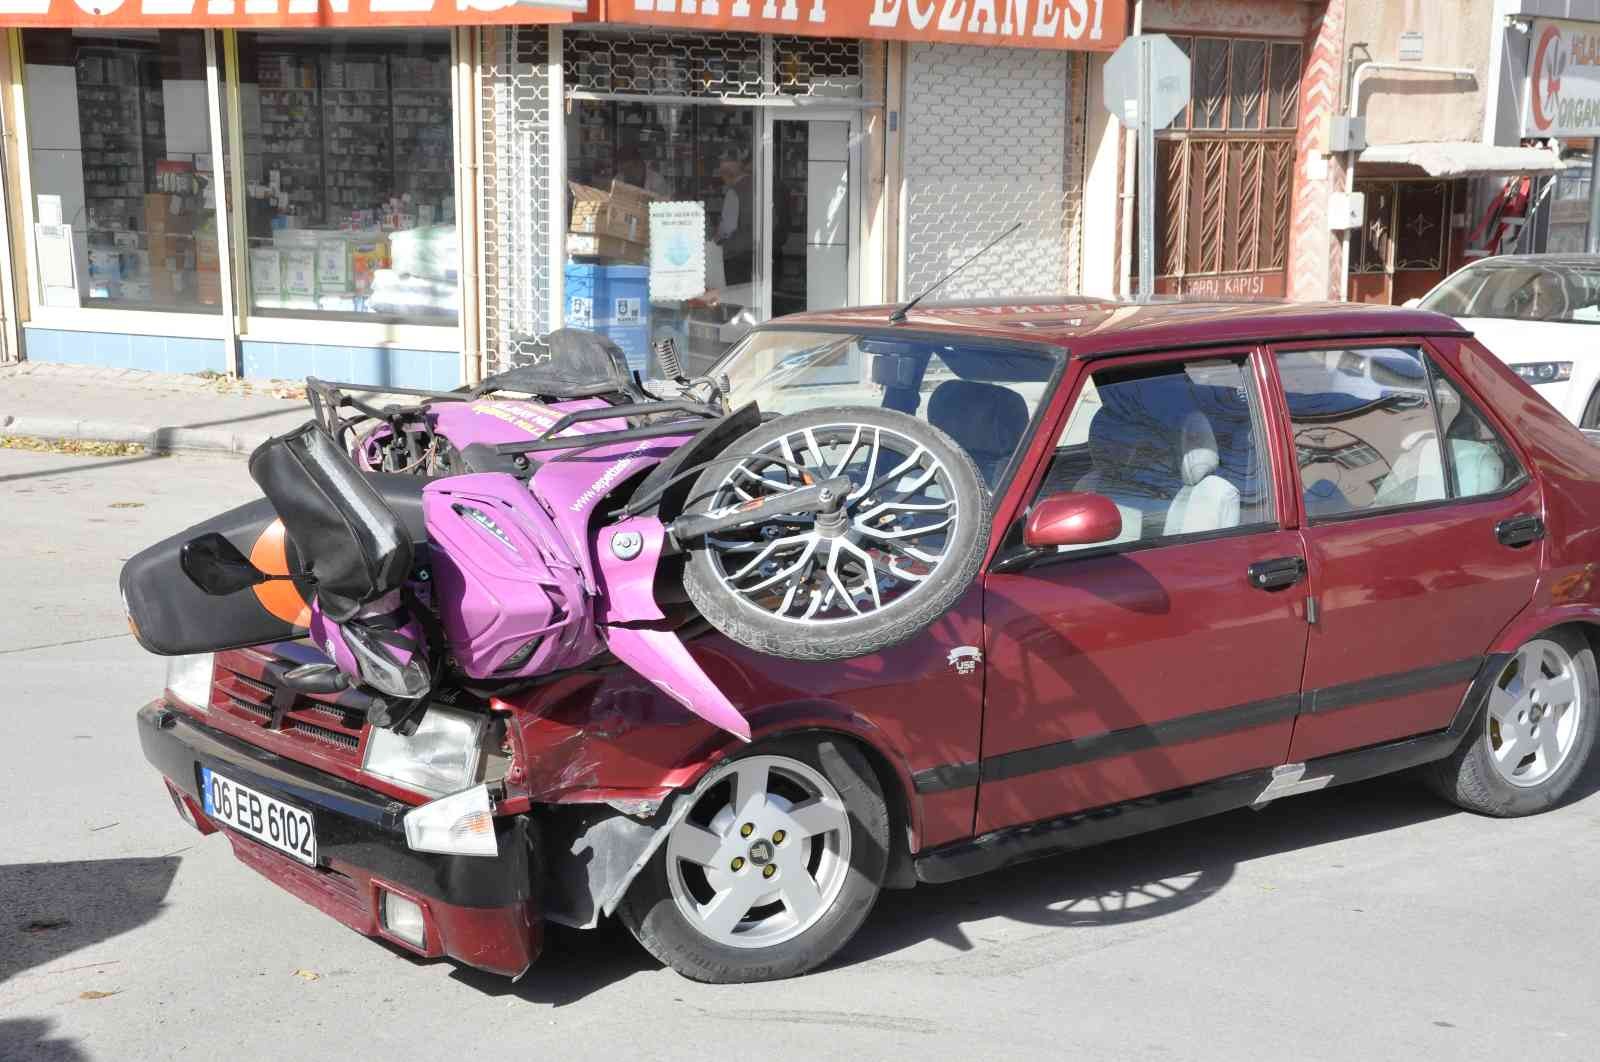 Karaman’da kaza yapan motosiklet otomobilin kaportasında kaldı #karaman